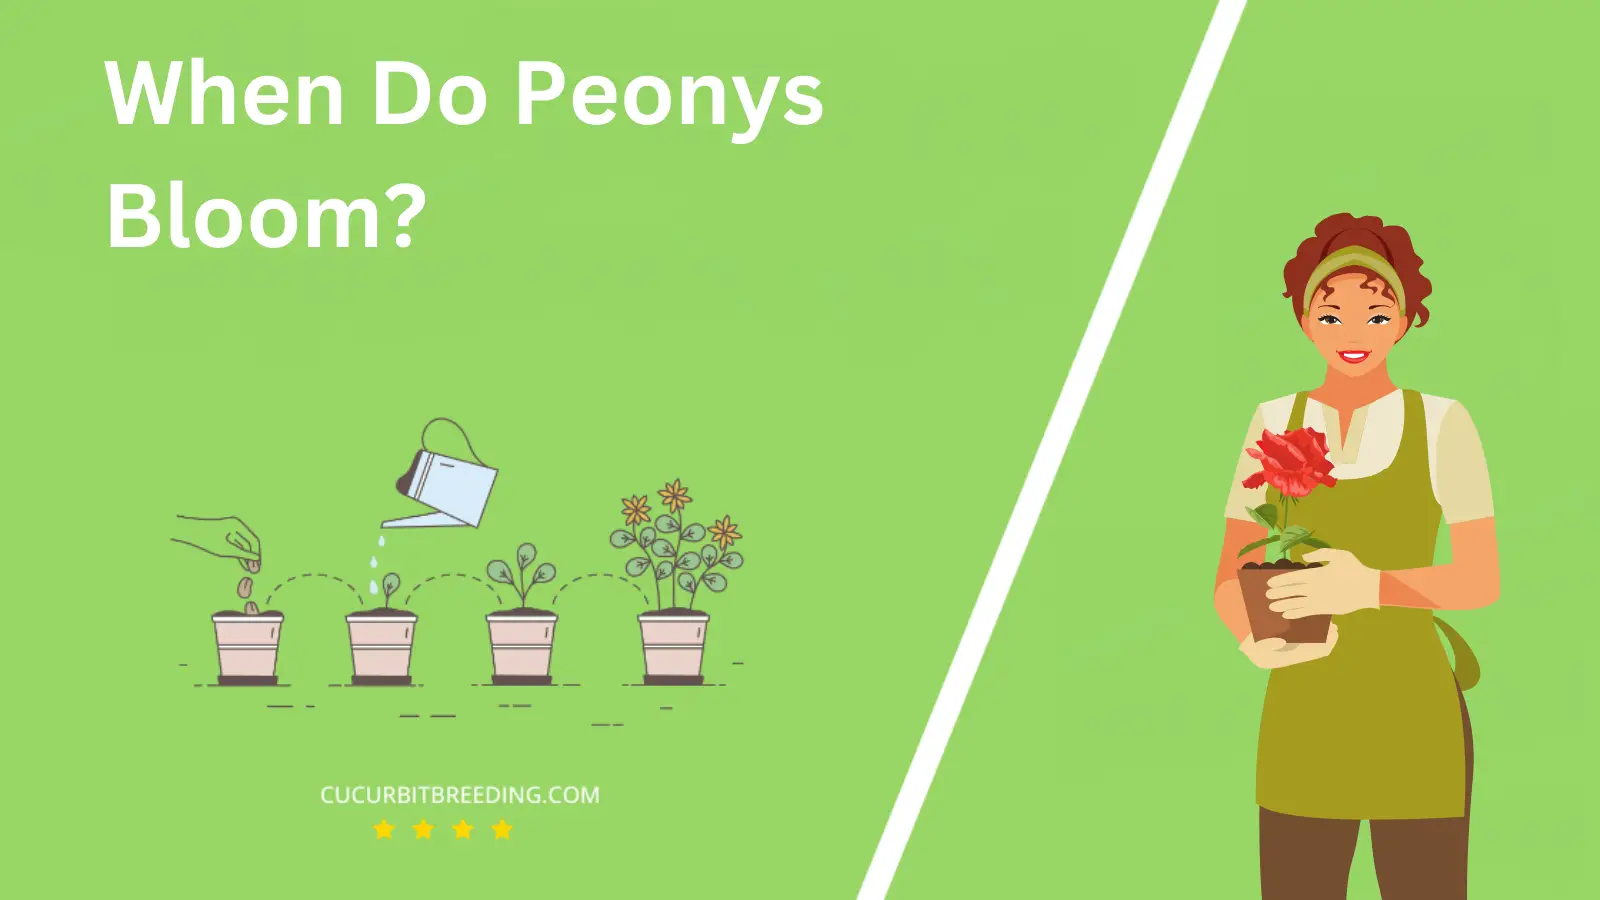 When Do Peonys Bloom?